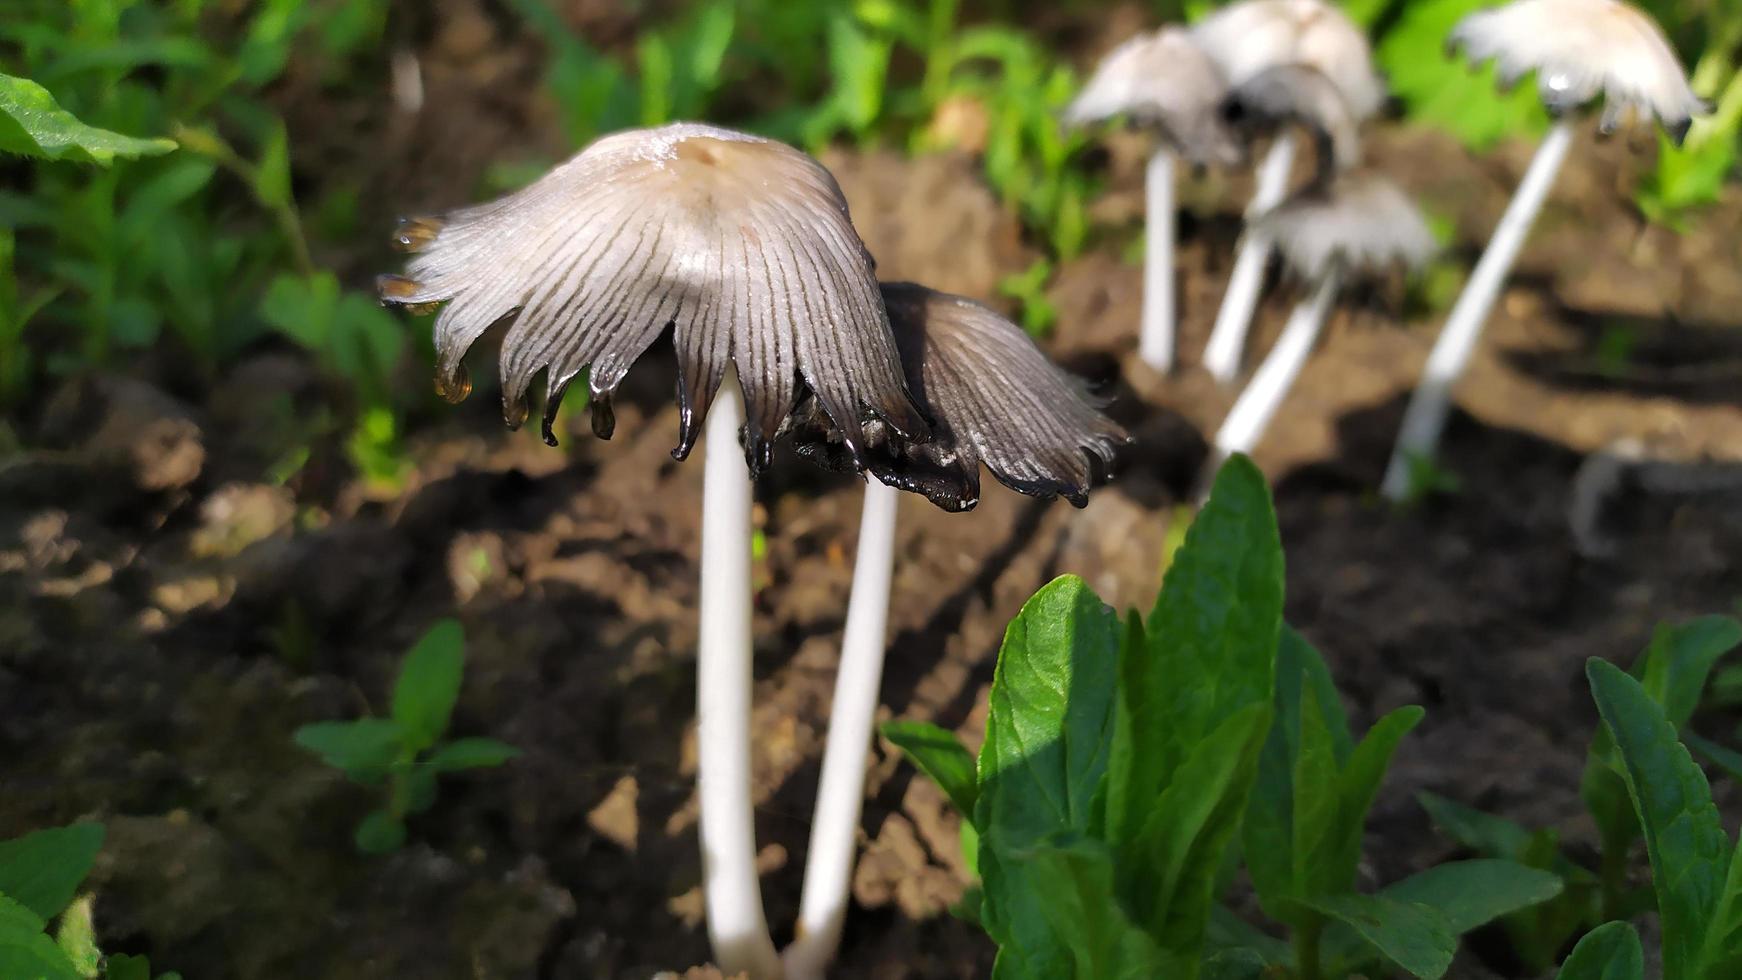 Mushrooms close-up. Toadstool mushrooms in the garden photo